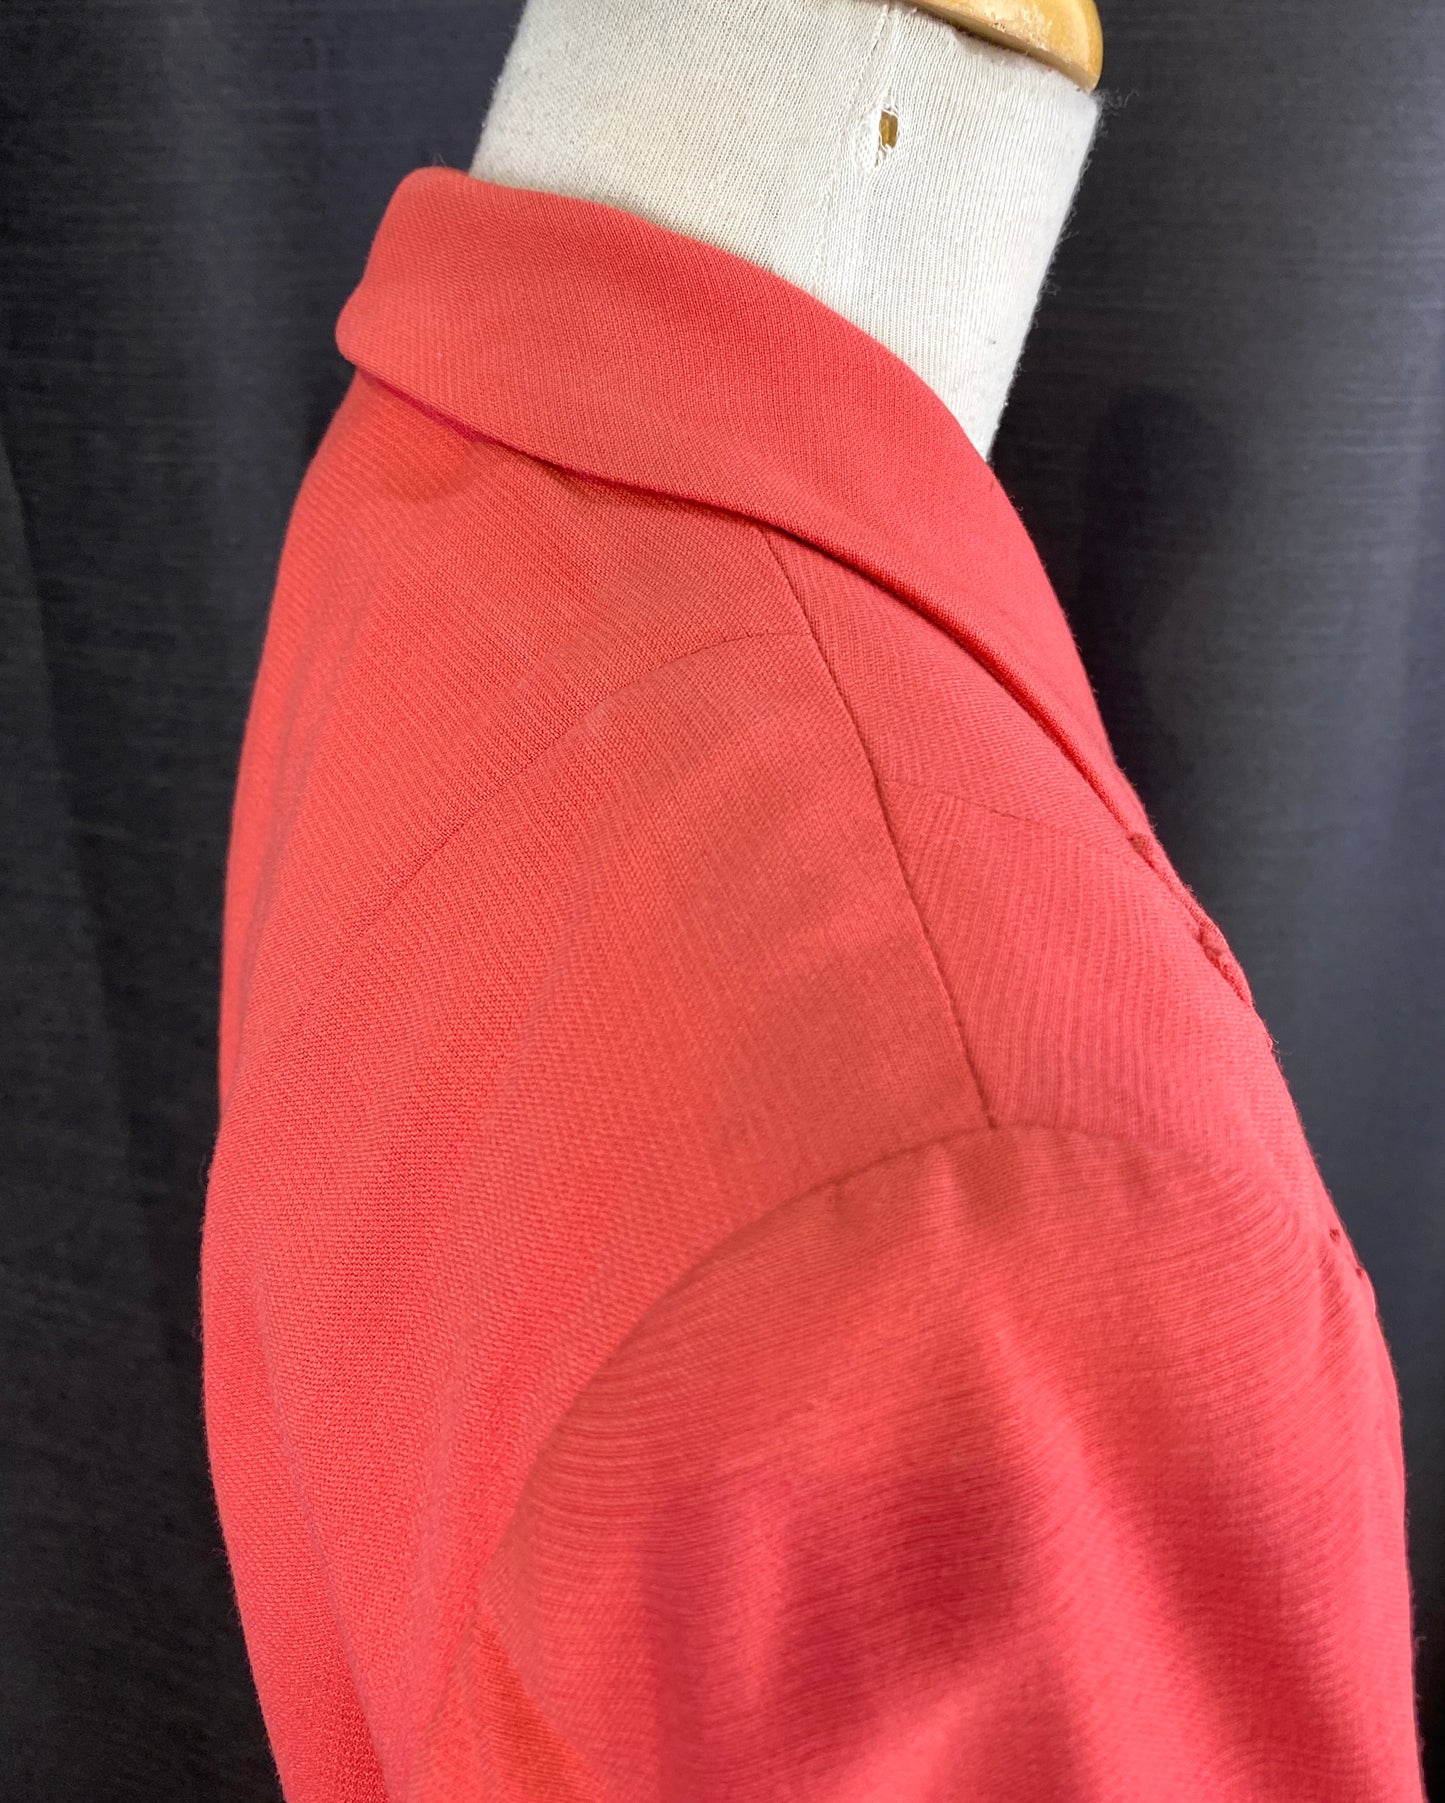 Vintage 1940s Coral Skirt Suit